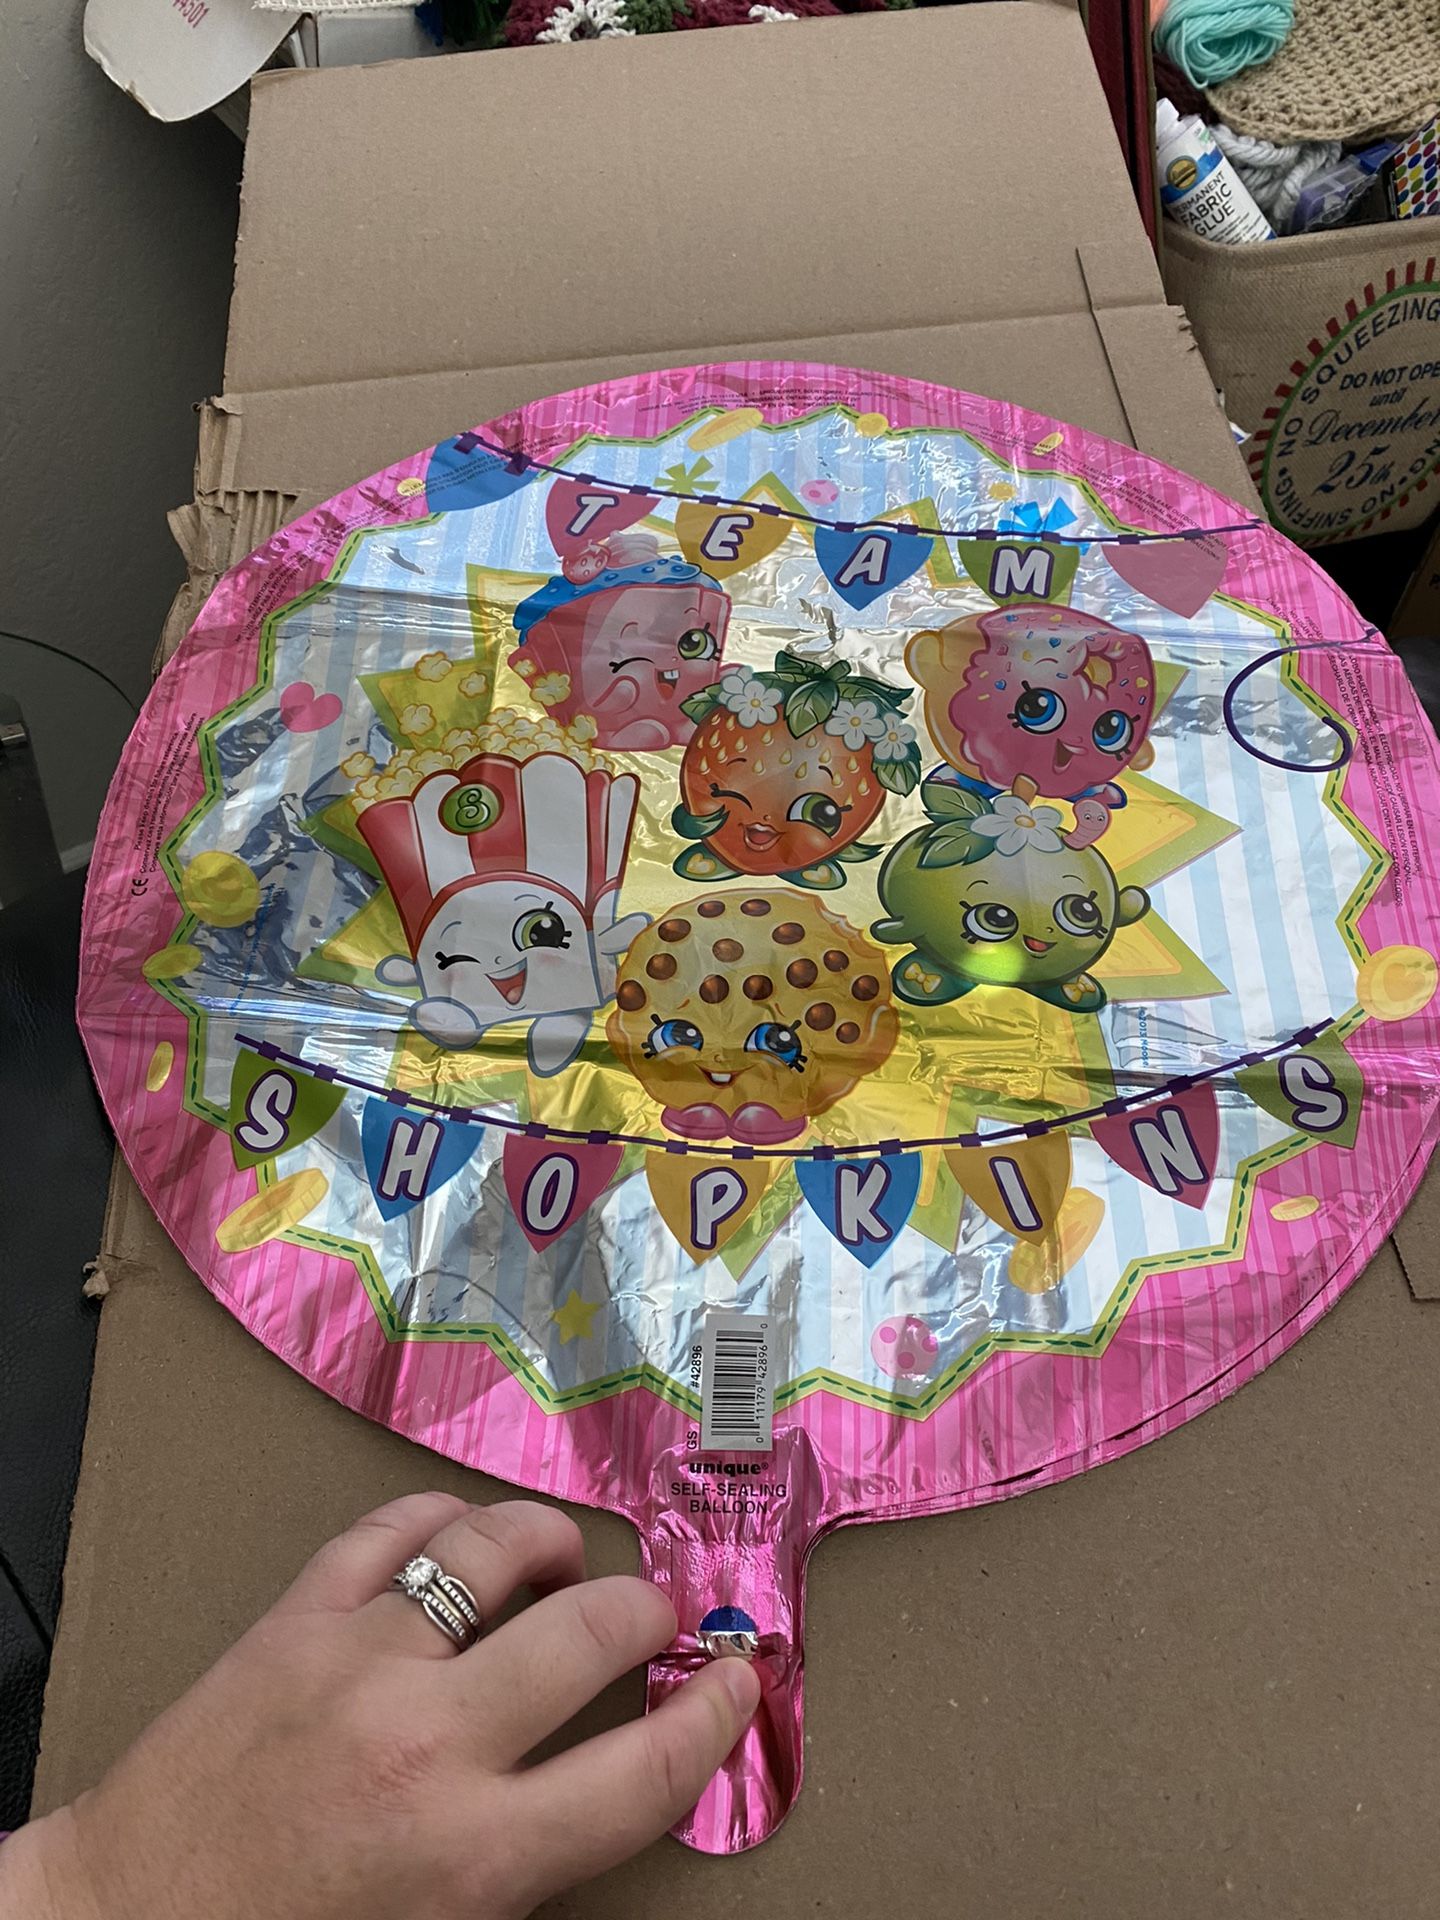 New Shopkins Foil Balloon 18”!